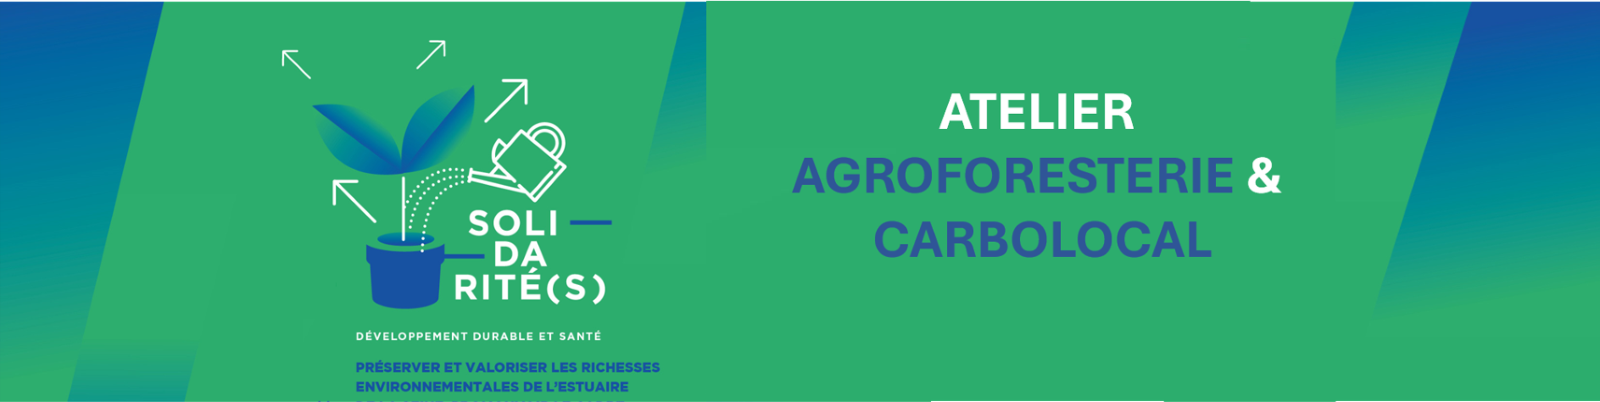 Atelier « Agroforesterie et Carbolocal »